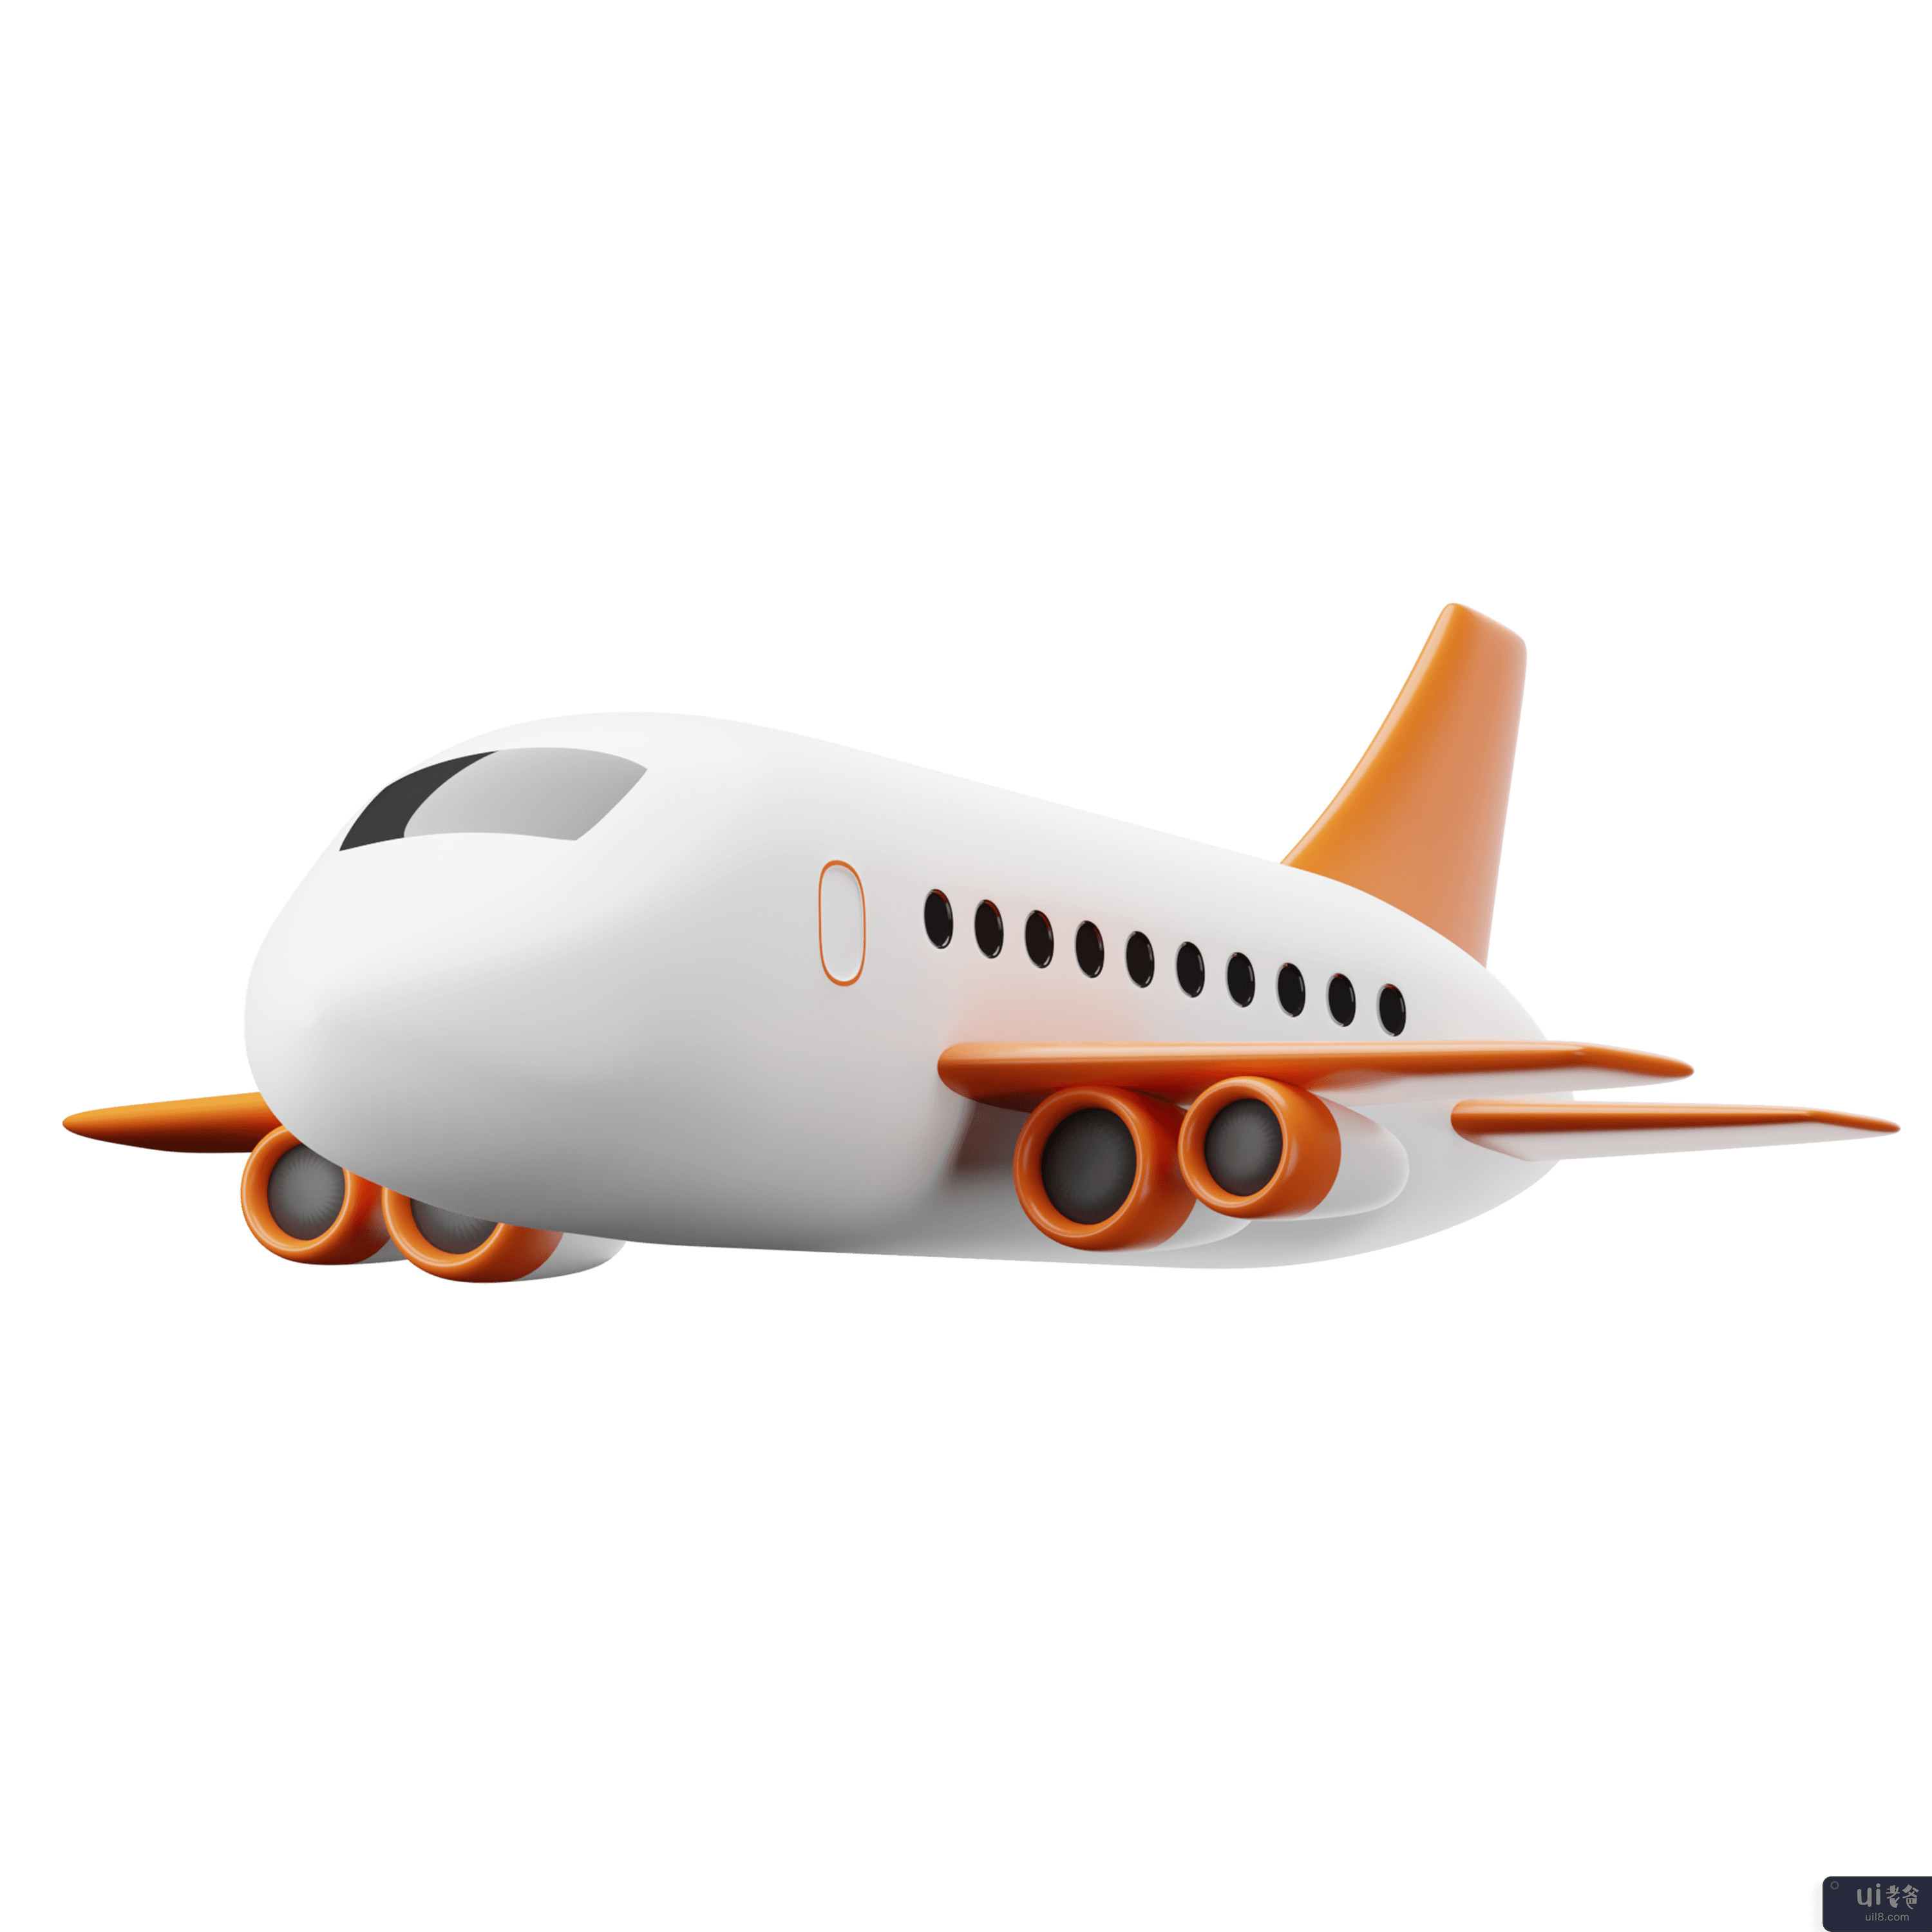 3D 旅行和假期插图包-飞机(3D Travel and Holidays Illustration Pack - Airplane)插图